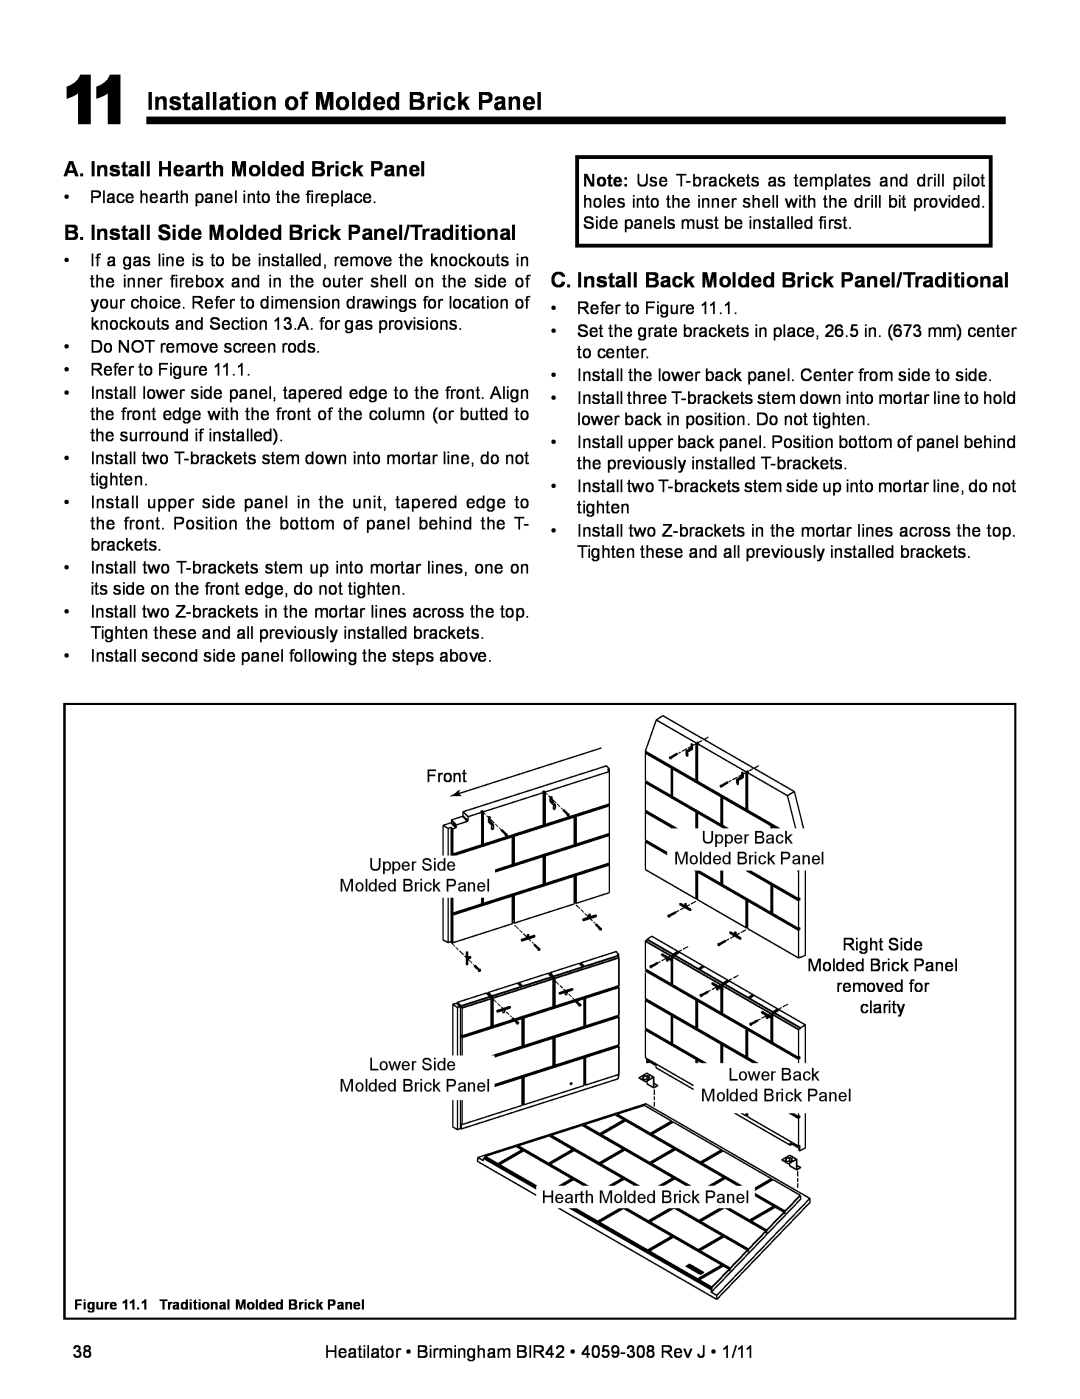 Heatiator BIR42 owner manual Installation of Molded Brick Panel, A. Install Hearth Molded Brick Panel 